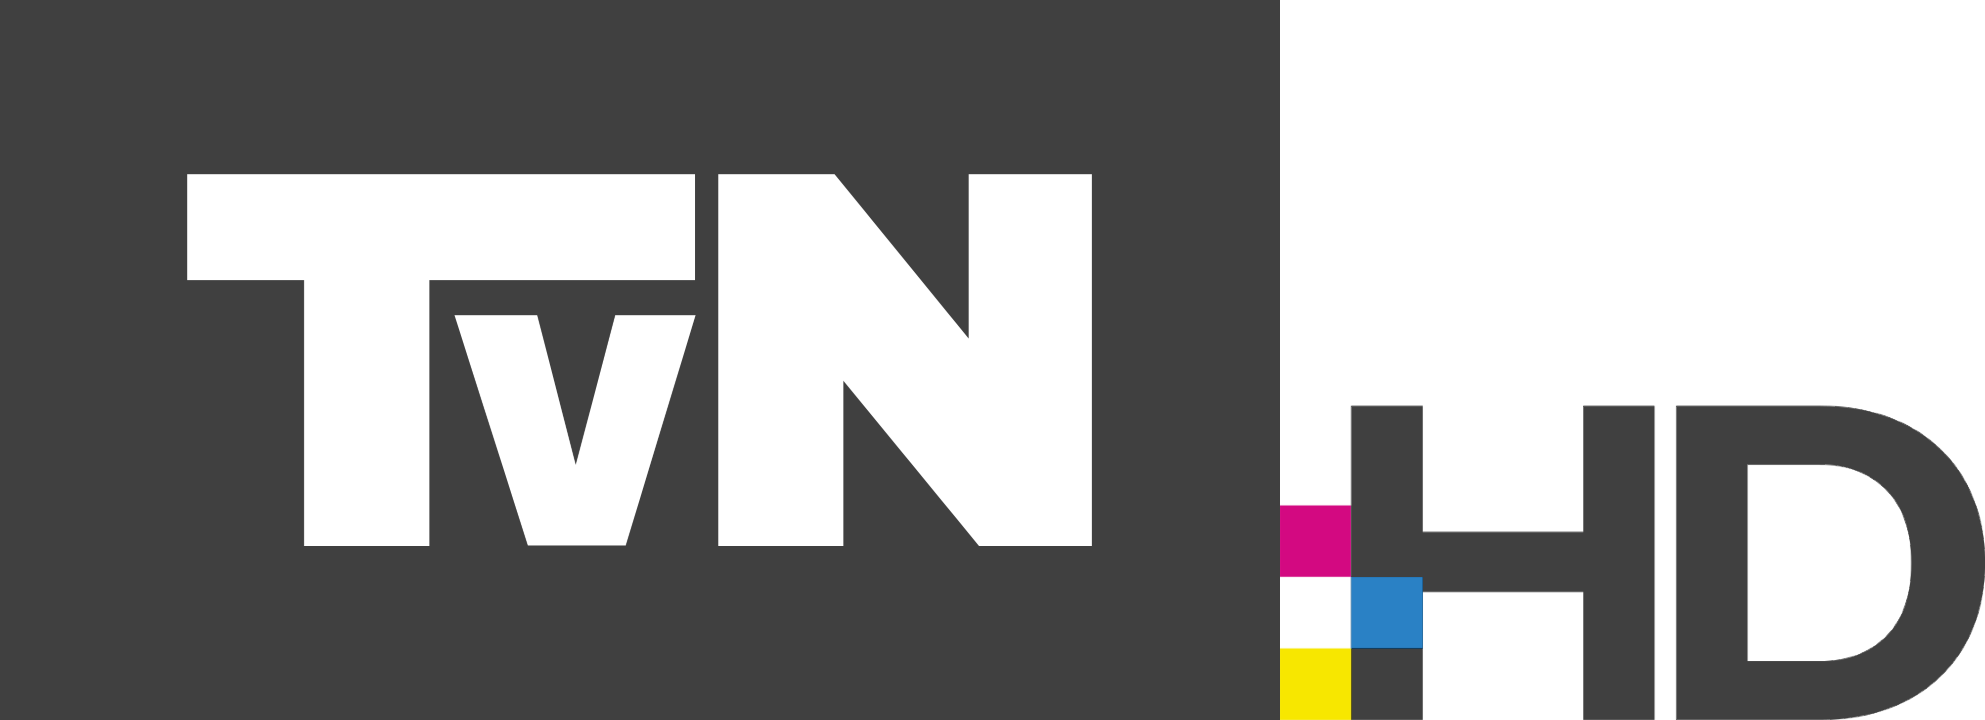 Download Tvnimerise Hd Tvn Logo PNG Image With No Background PNGkey Com